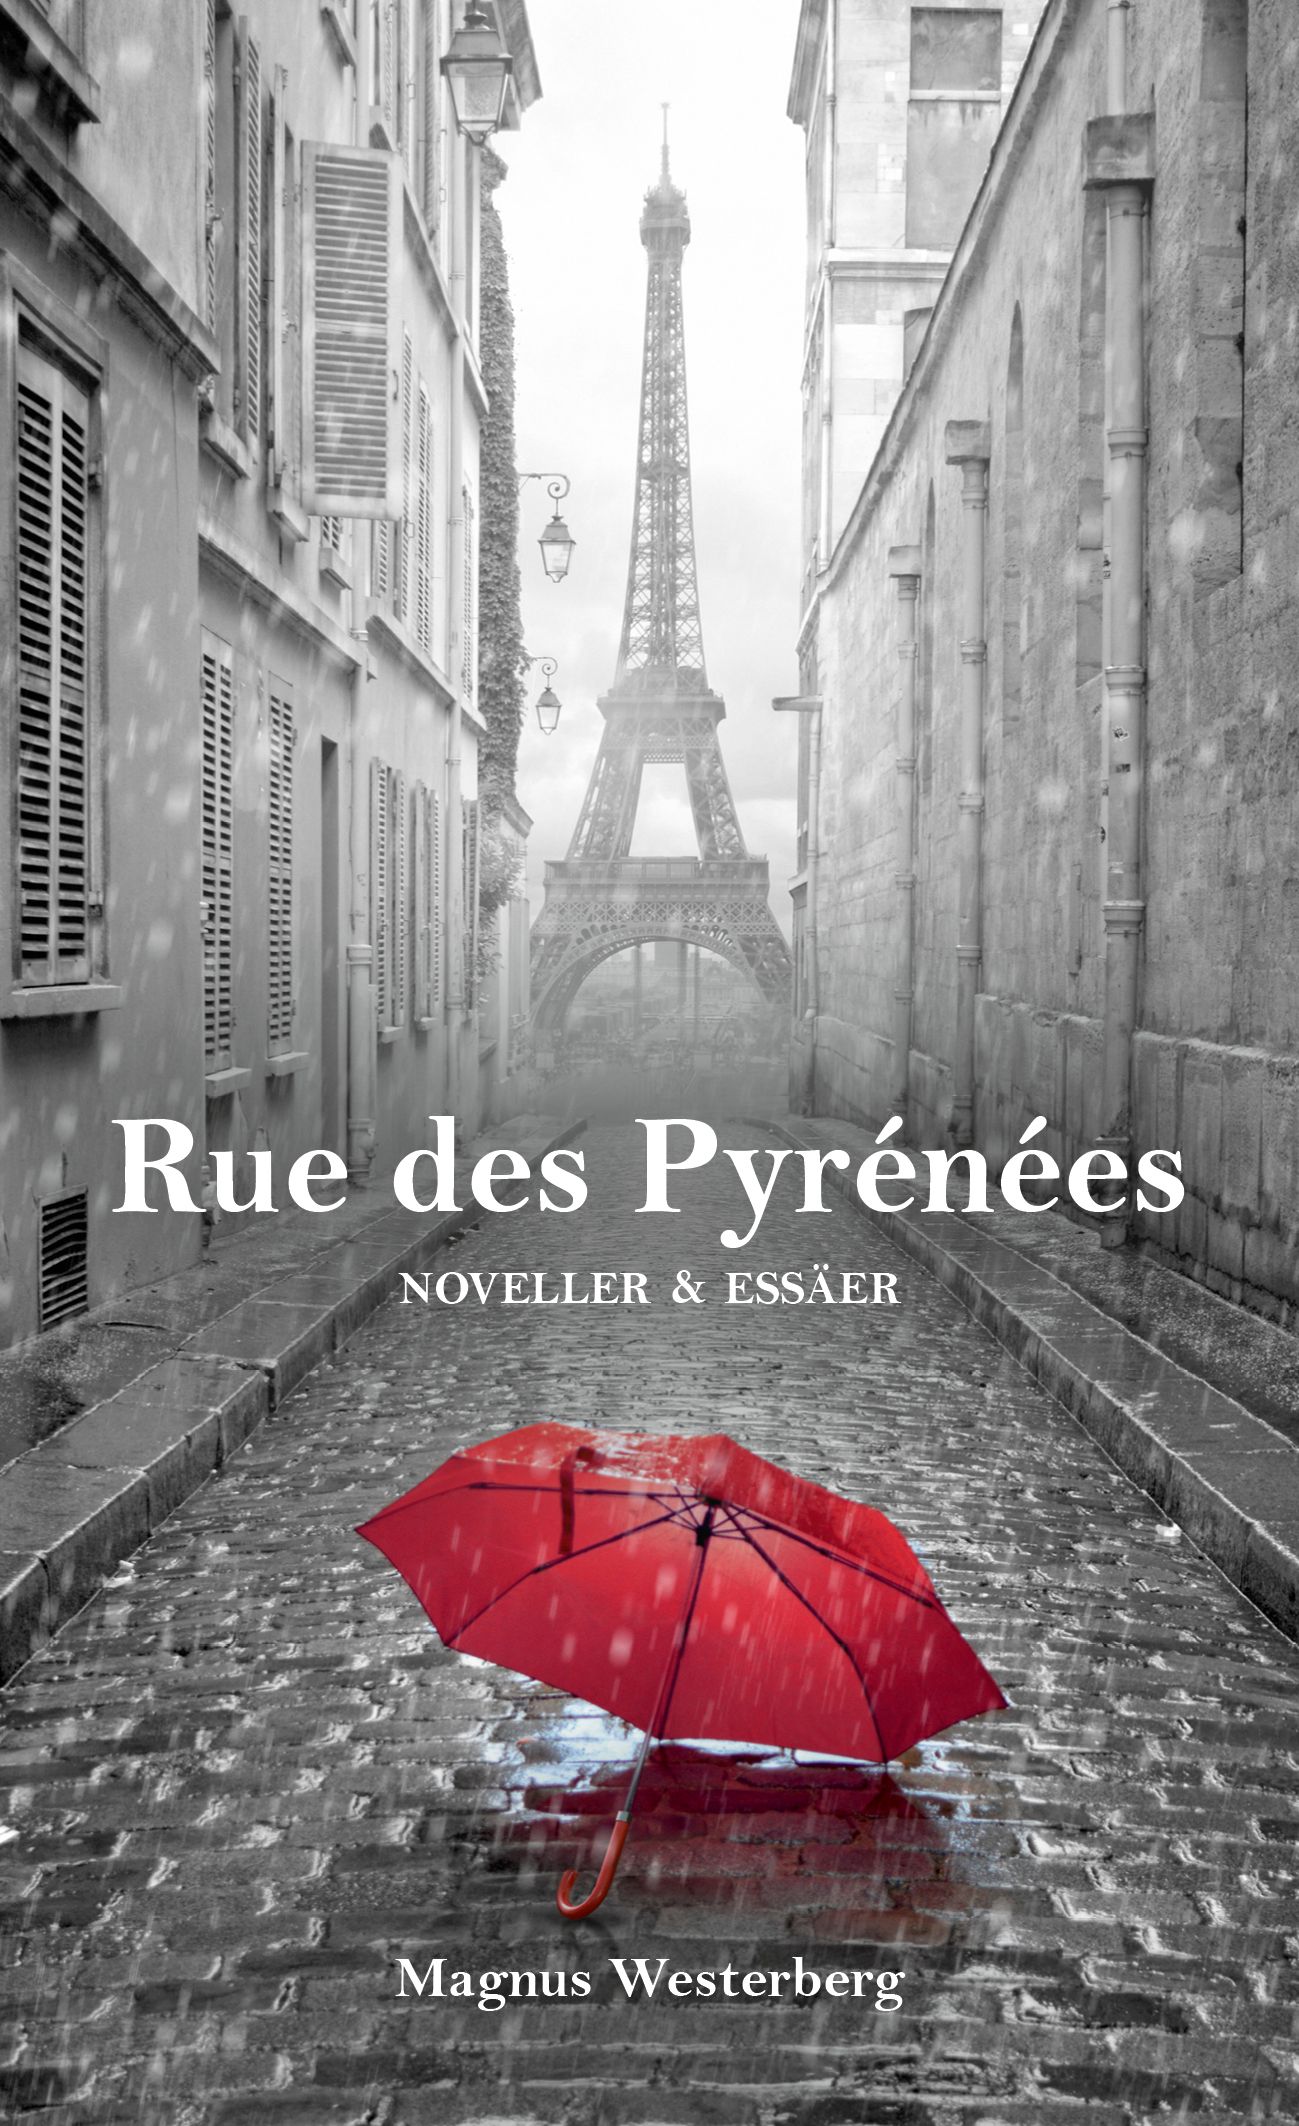 Rue des Pyrénées, eBook by Magnus Westerberg